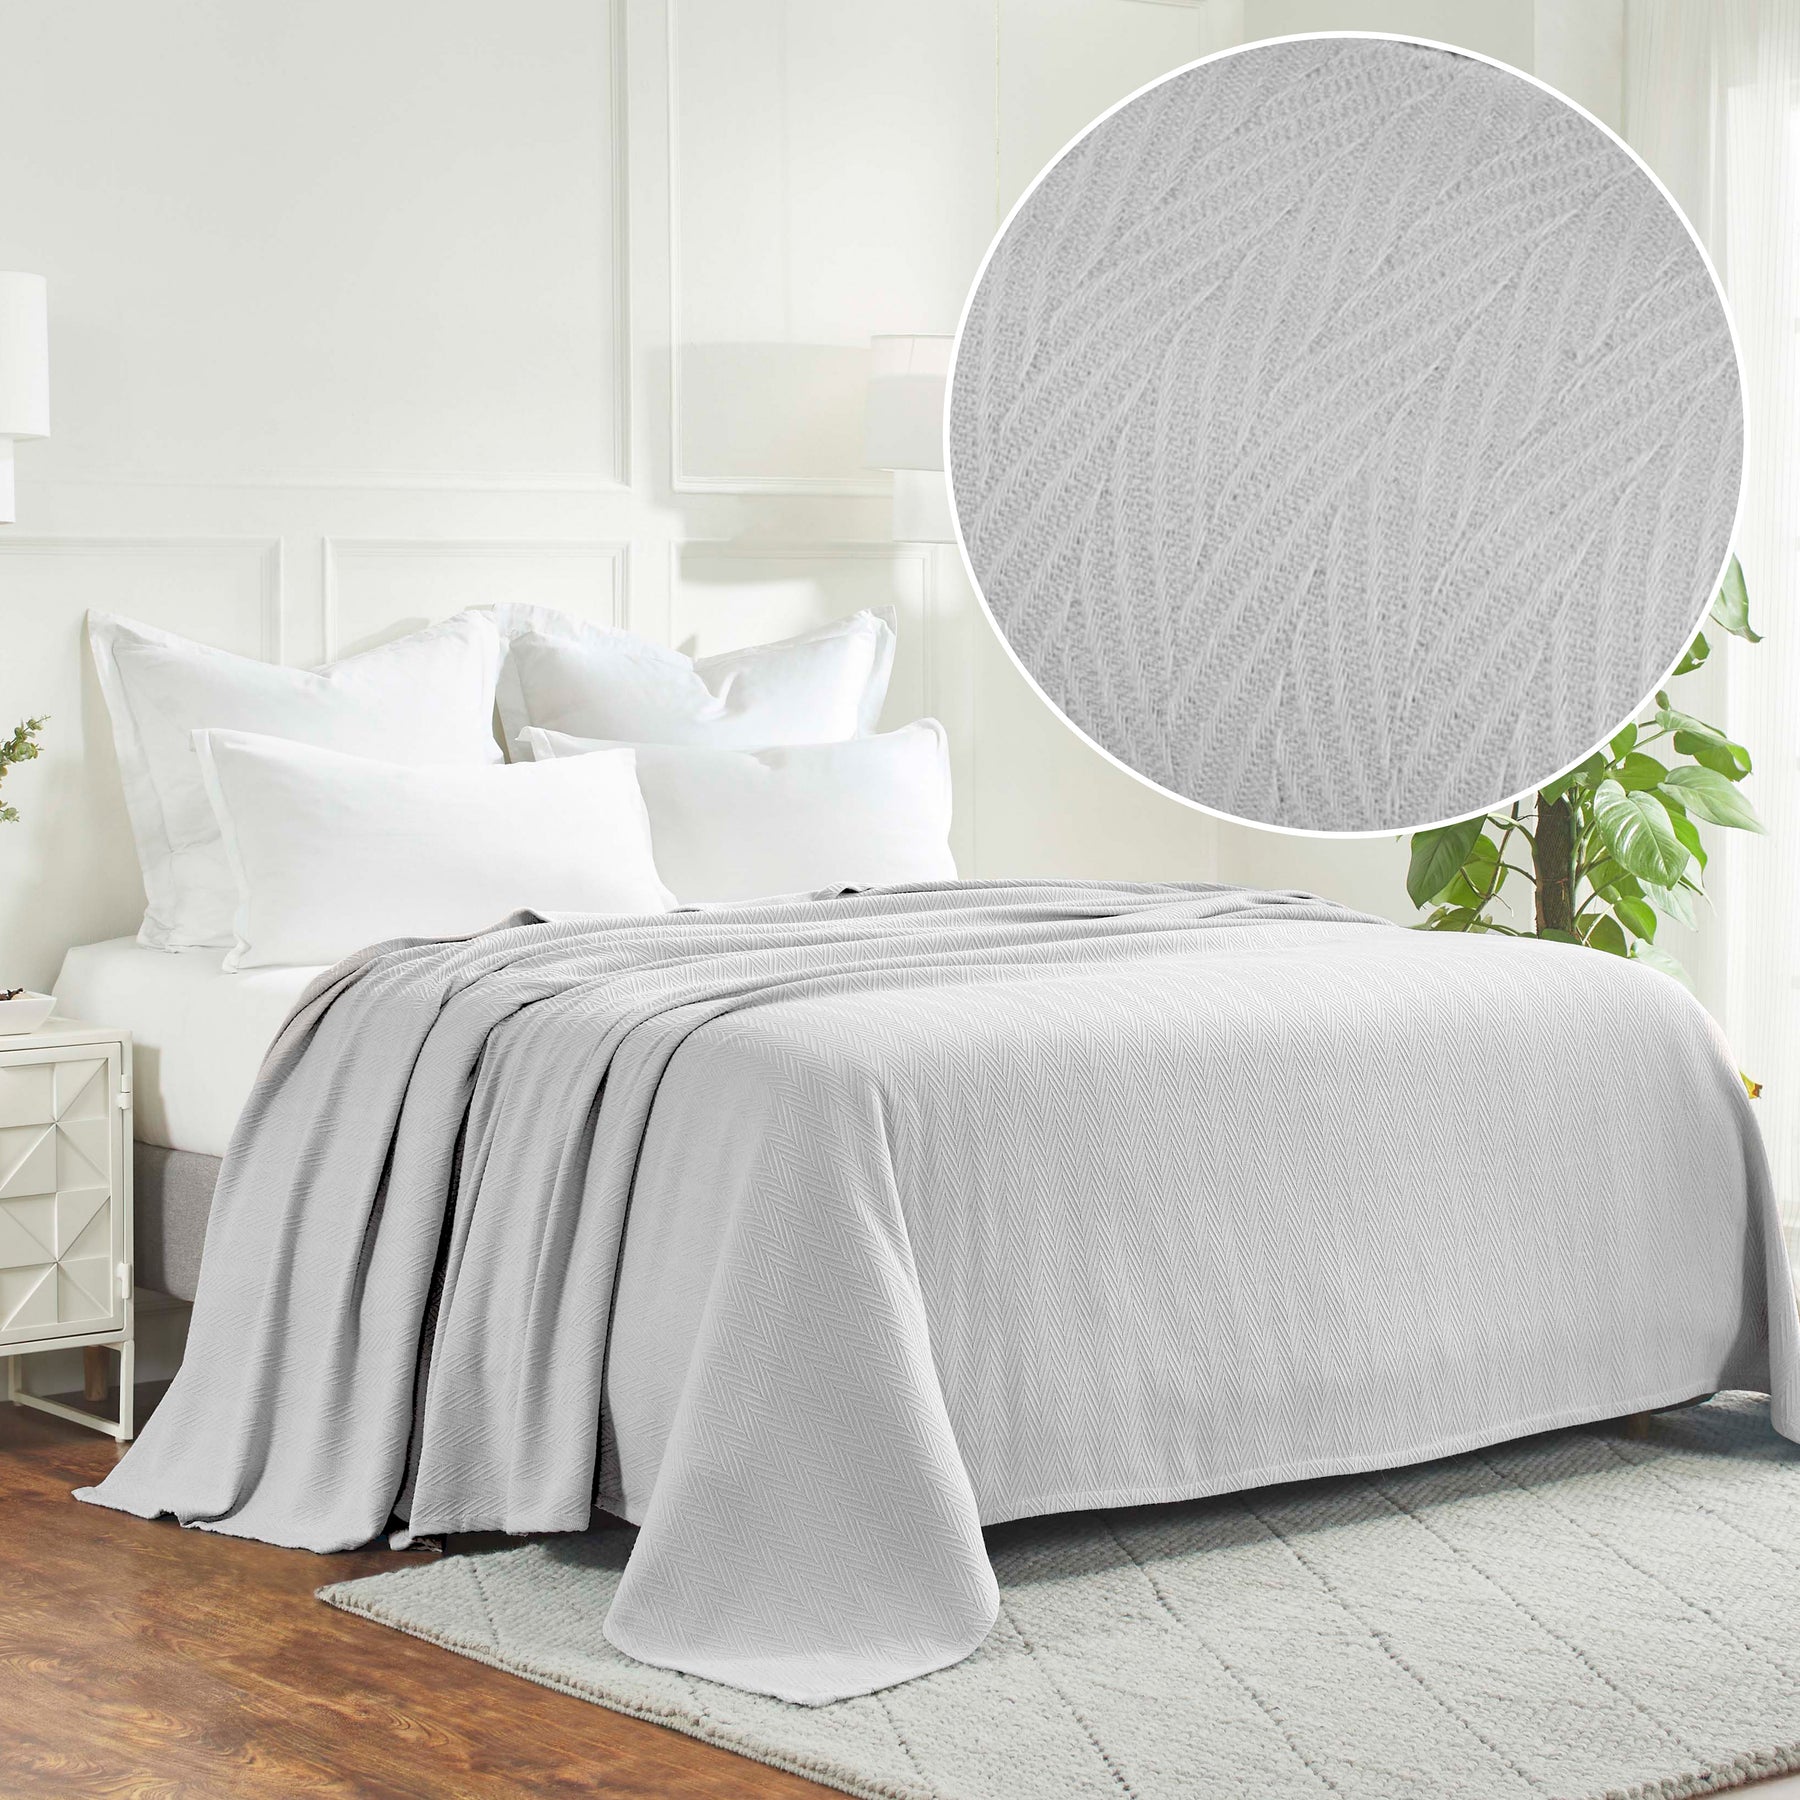 Herringbone All-Season Woven Cotton Blanket - Silver